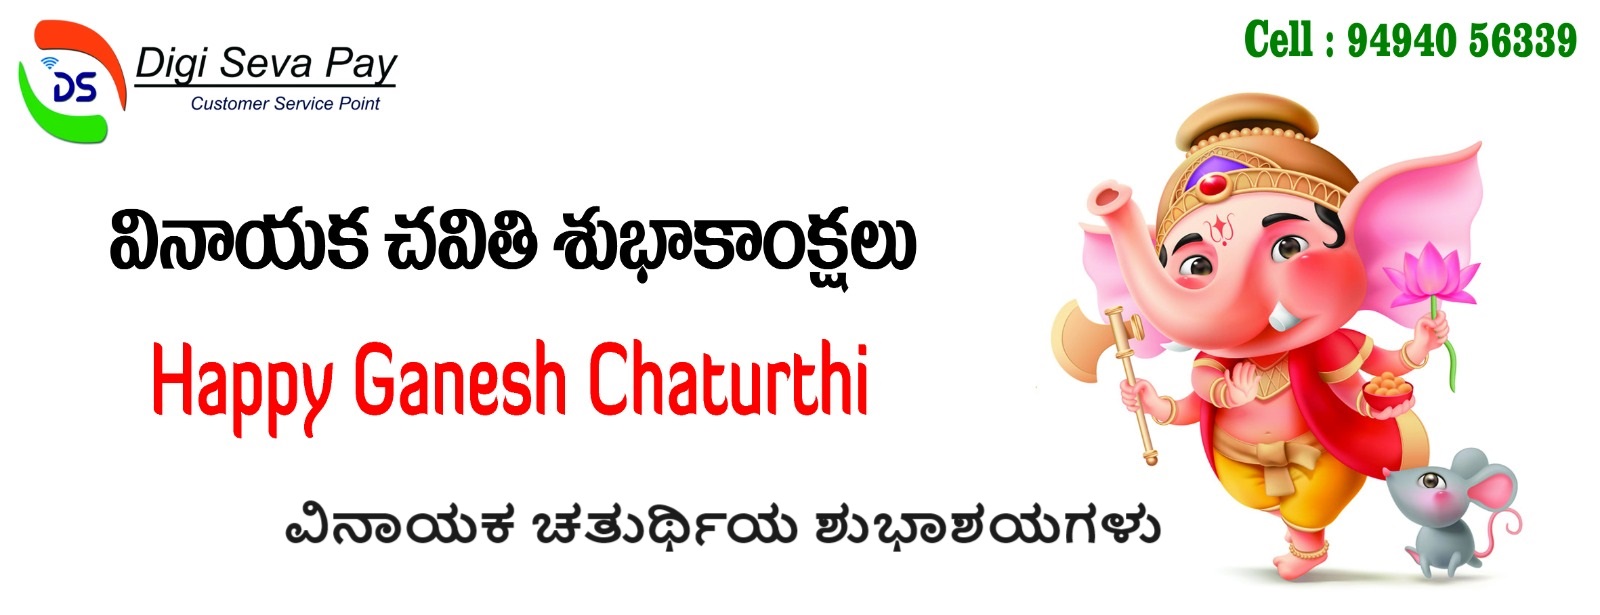 Happy Ganesh Chaturthi to all Digi Seva Family Members